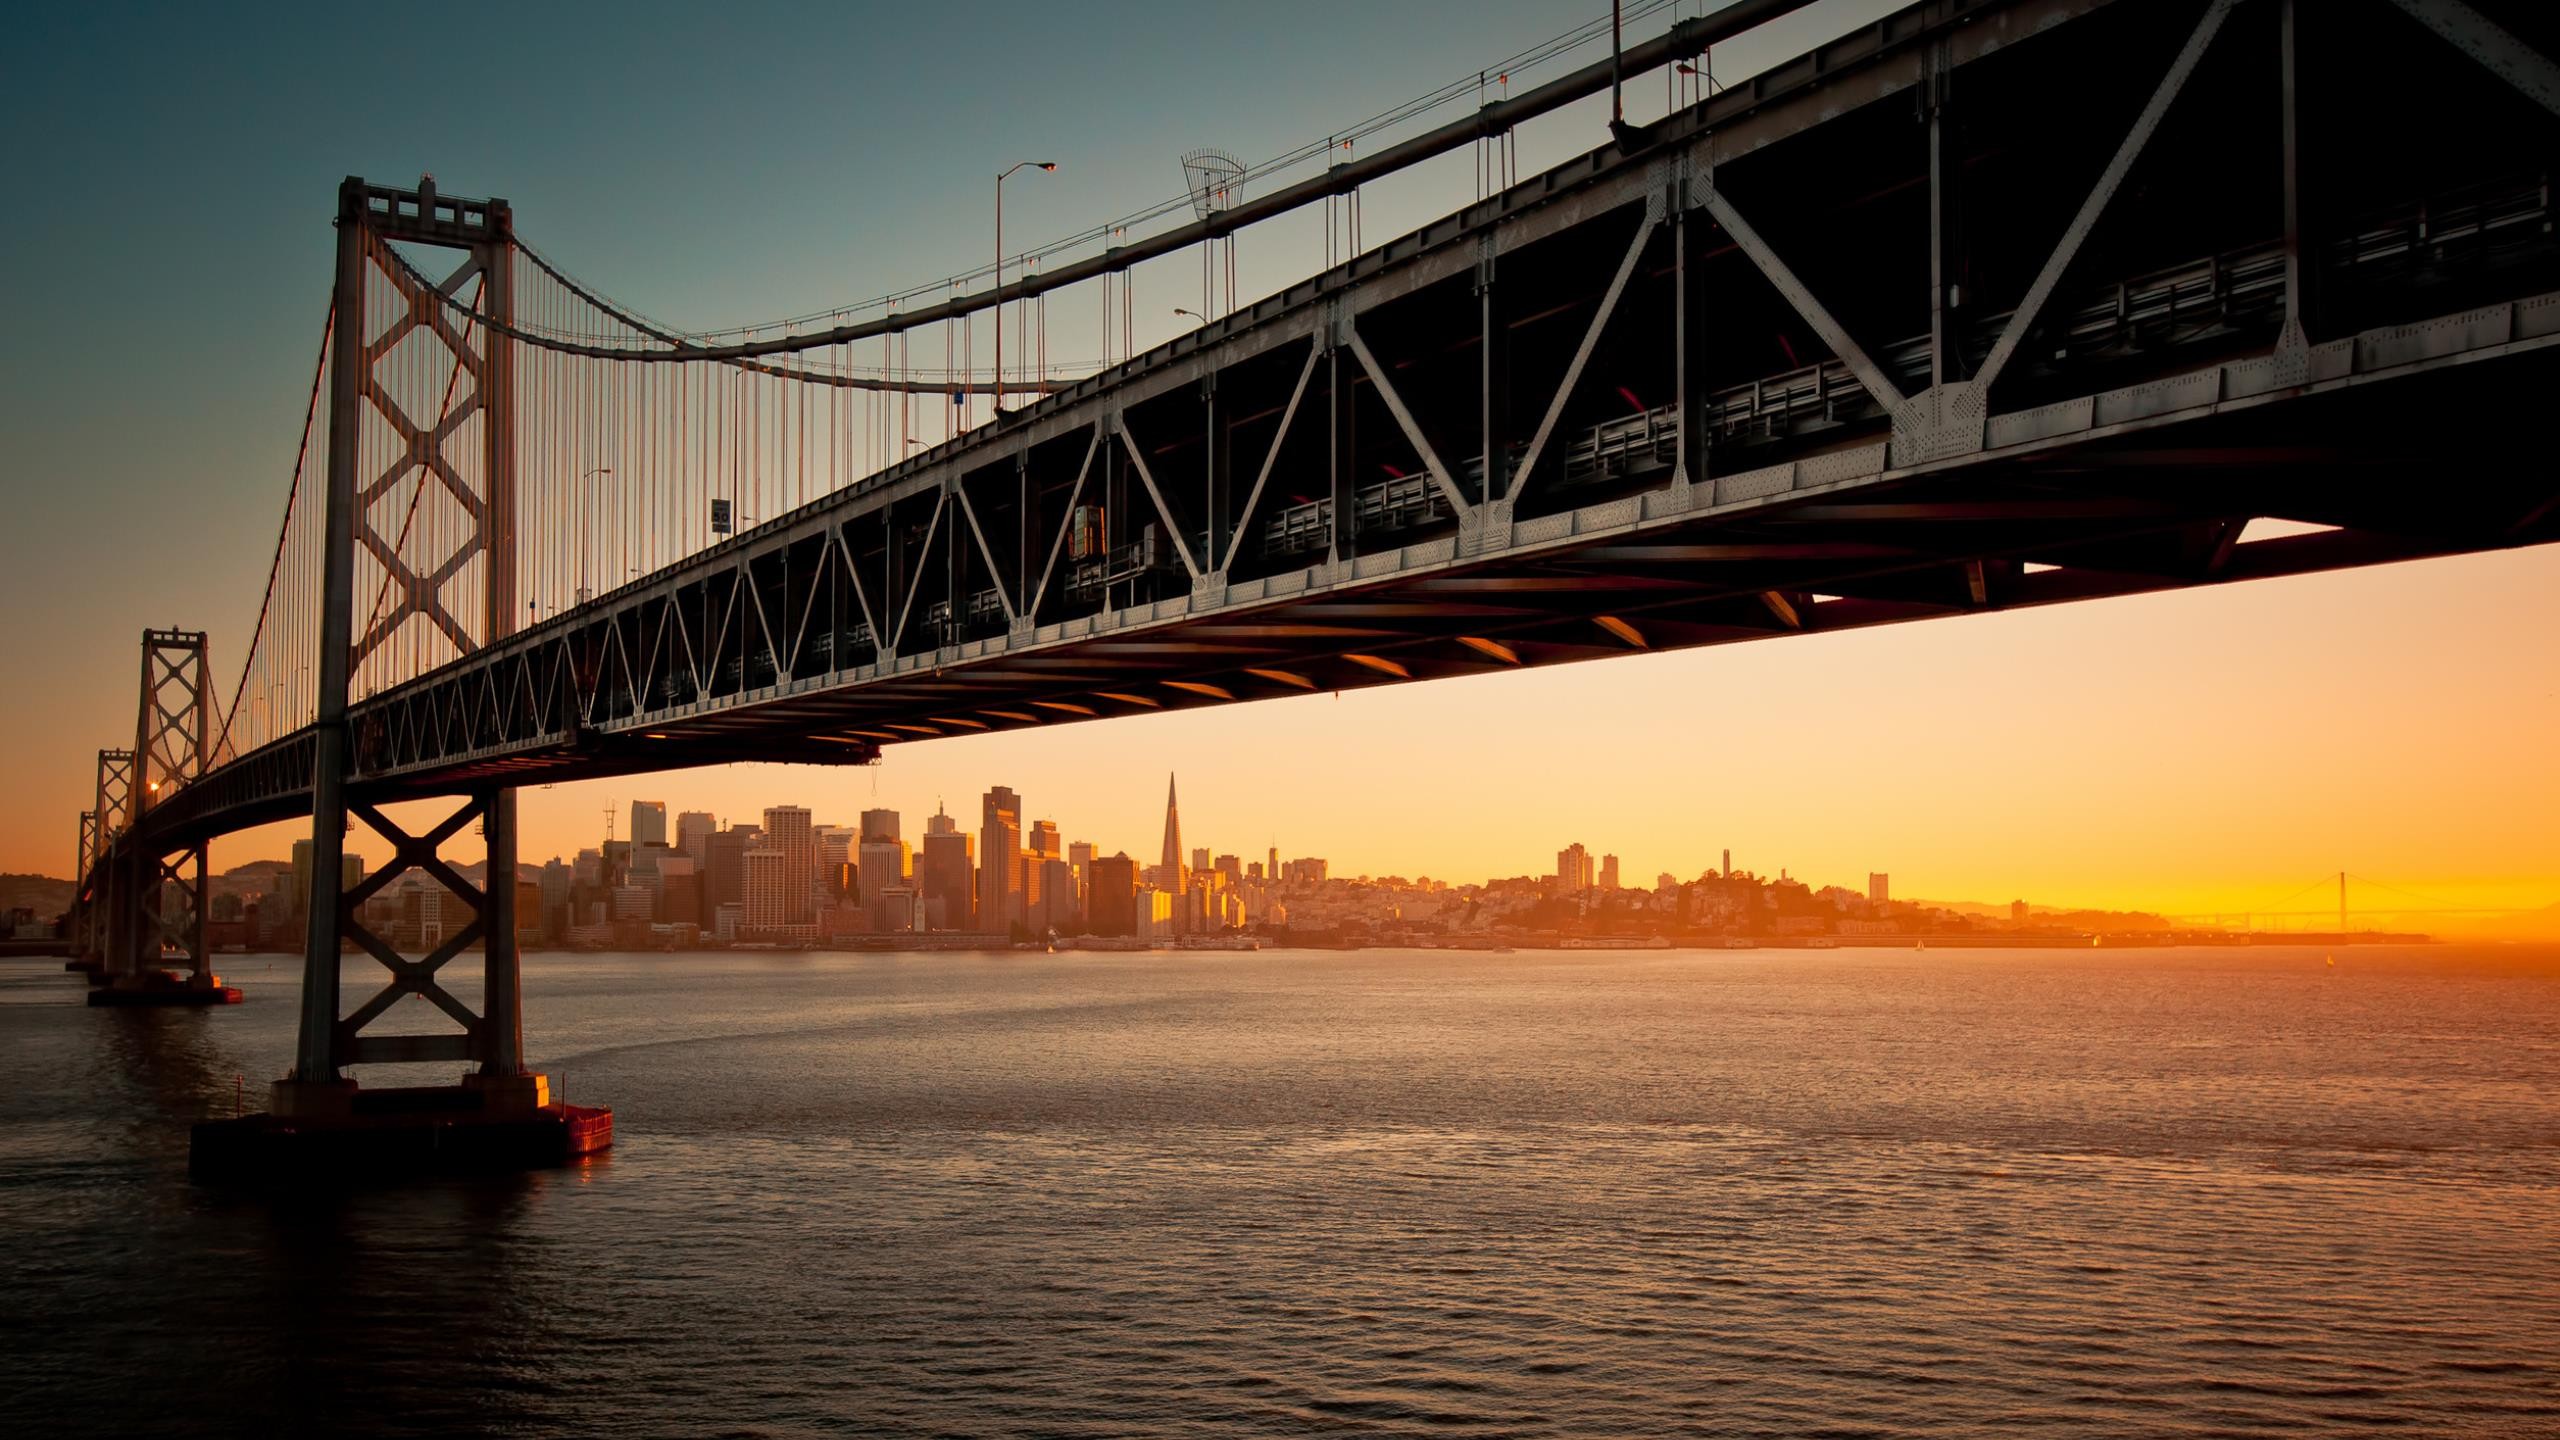 General 2560x1440 bridge architecture sunset cityscape city suspension bridge Oakland Bay Bridge USA San Francisco